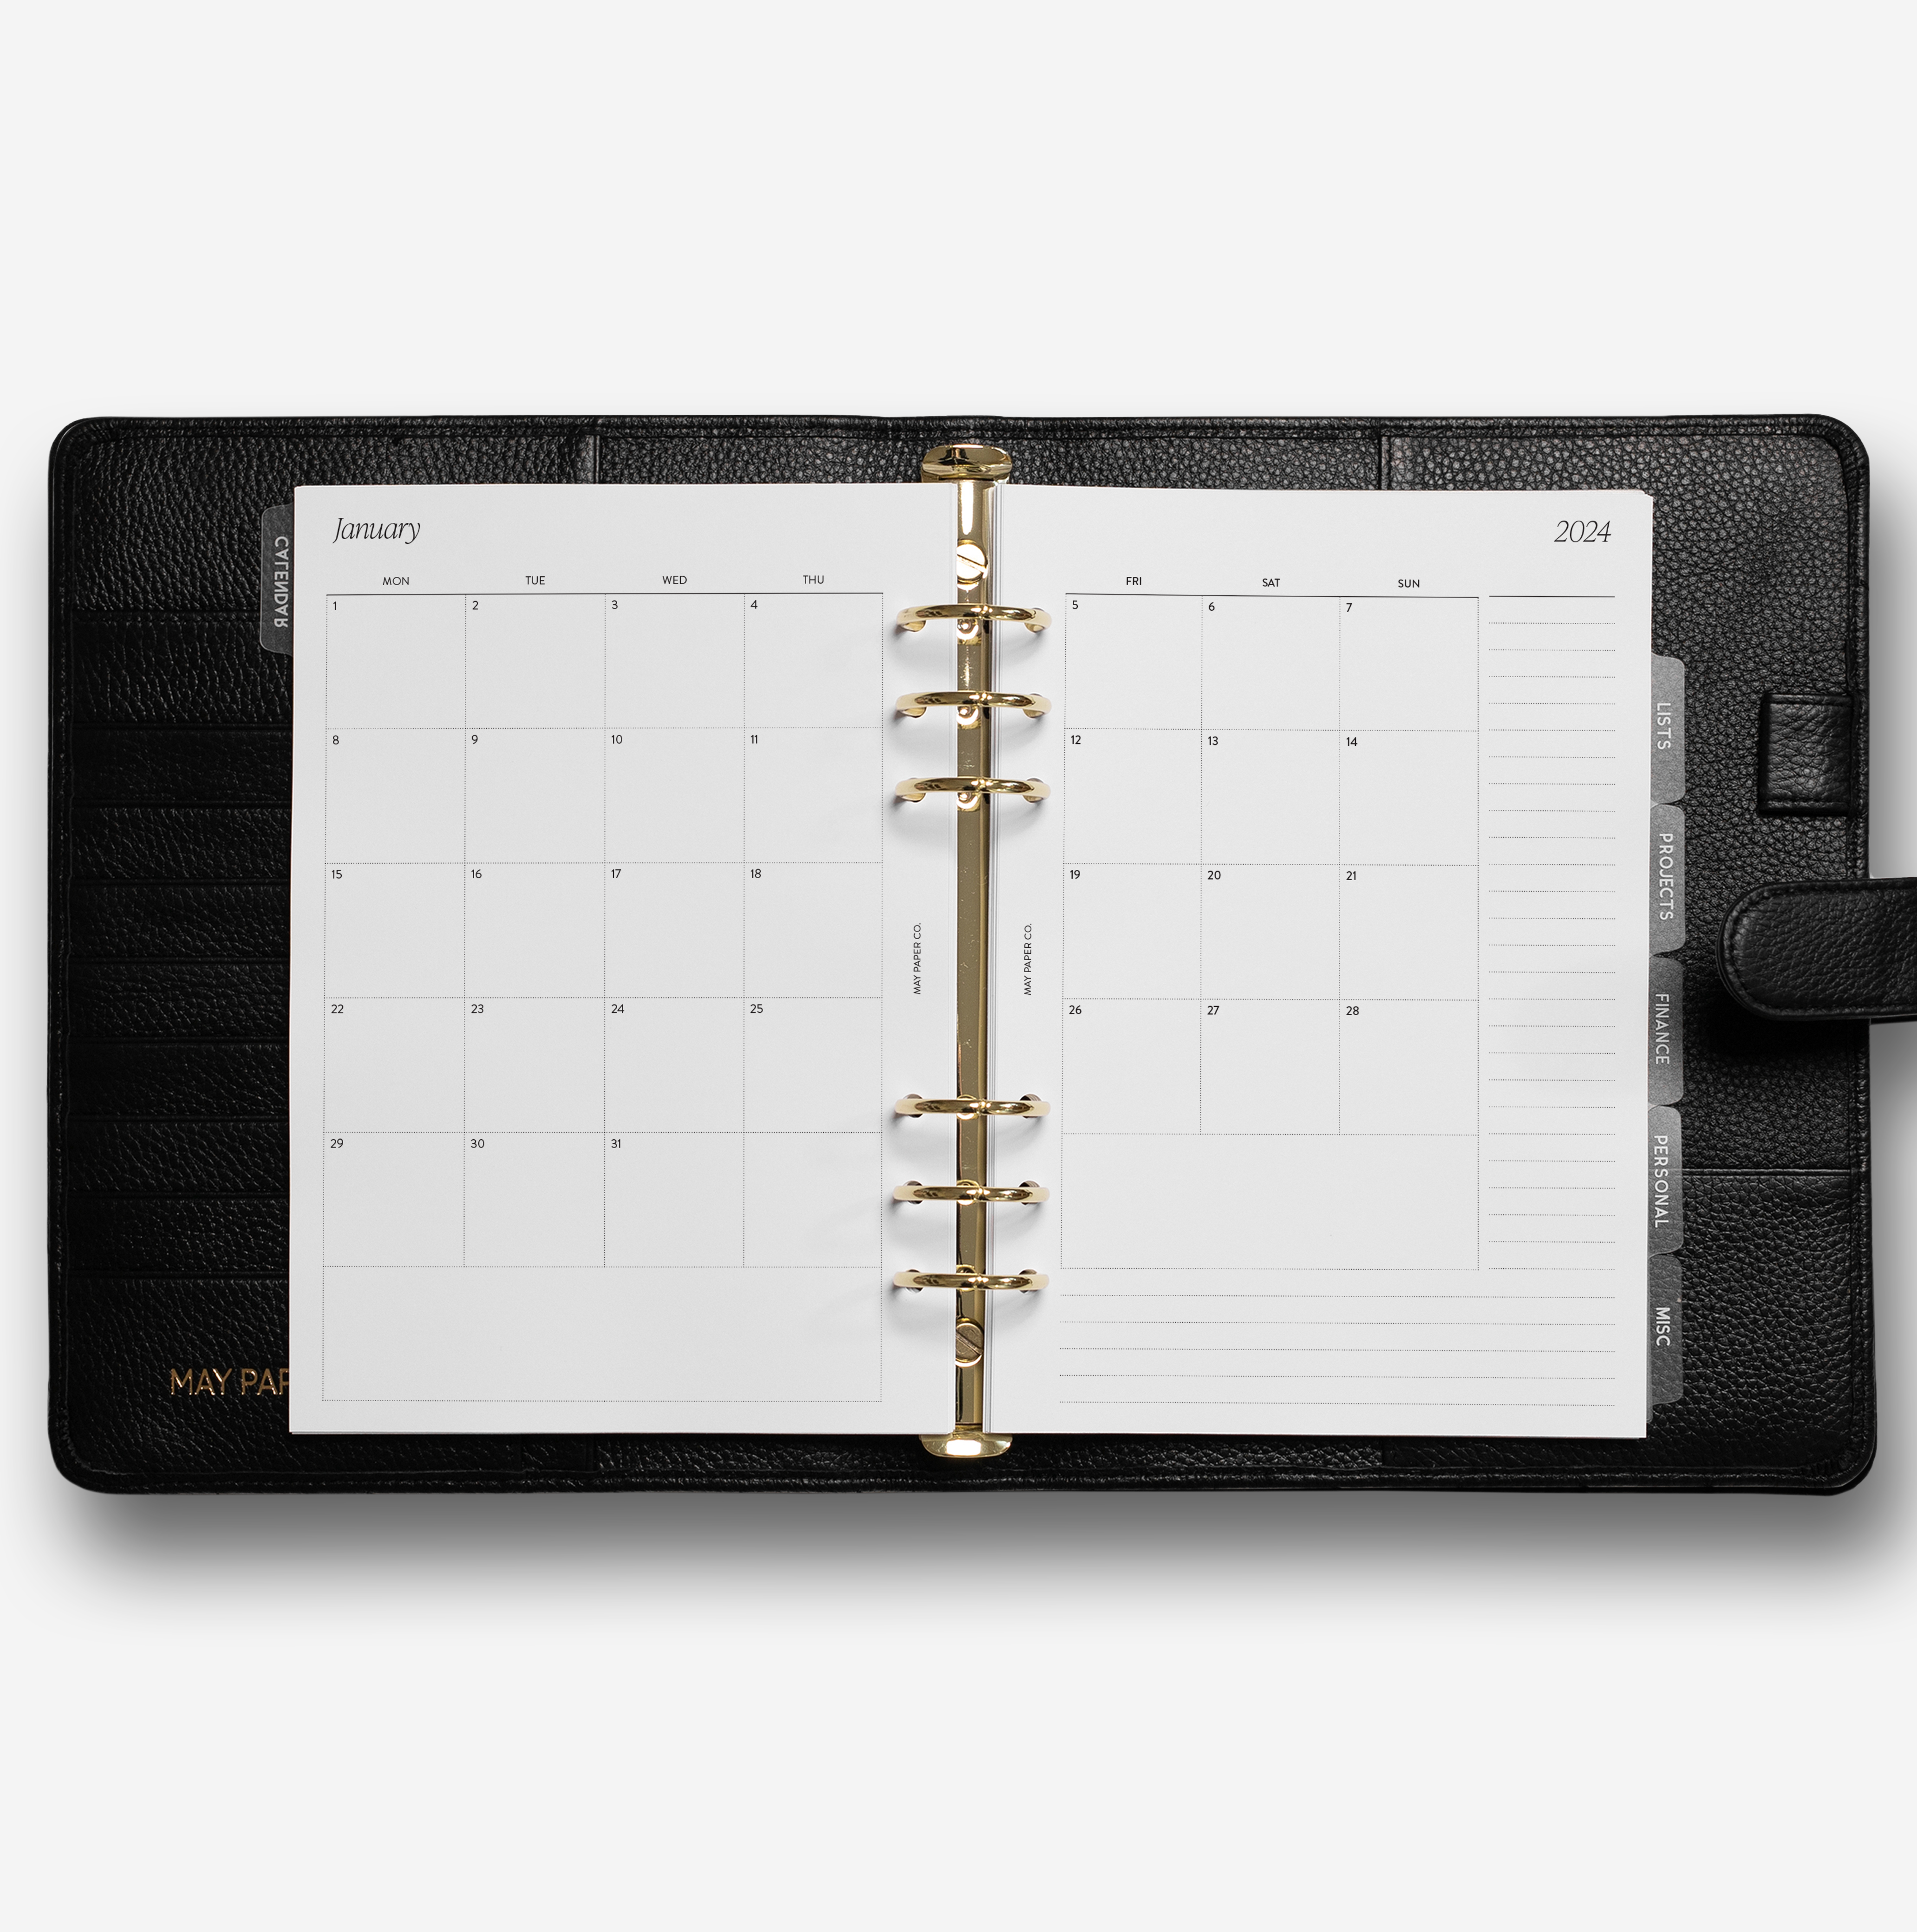 Notebook (Agenda) refill - PM size